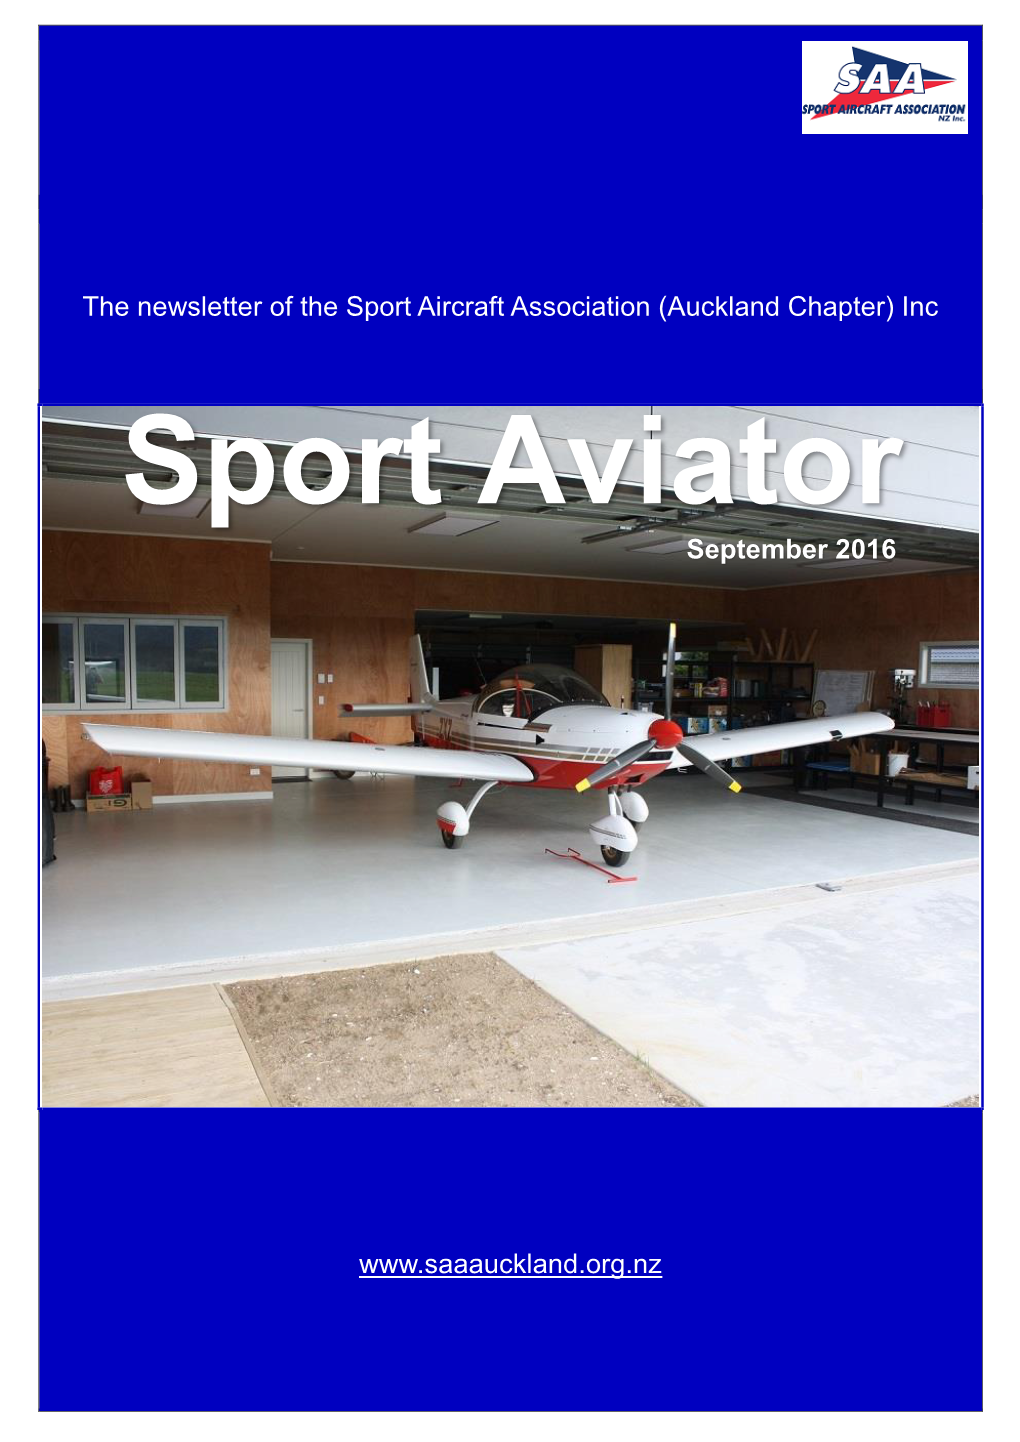 Newsletter of the Sport Aviation Association (Auckland Chapter)